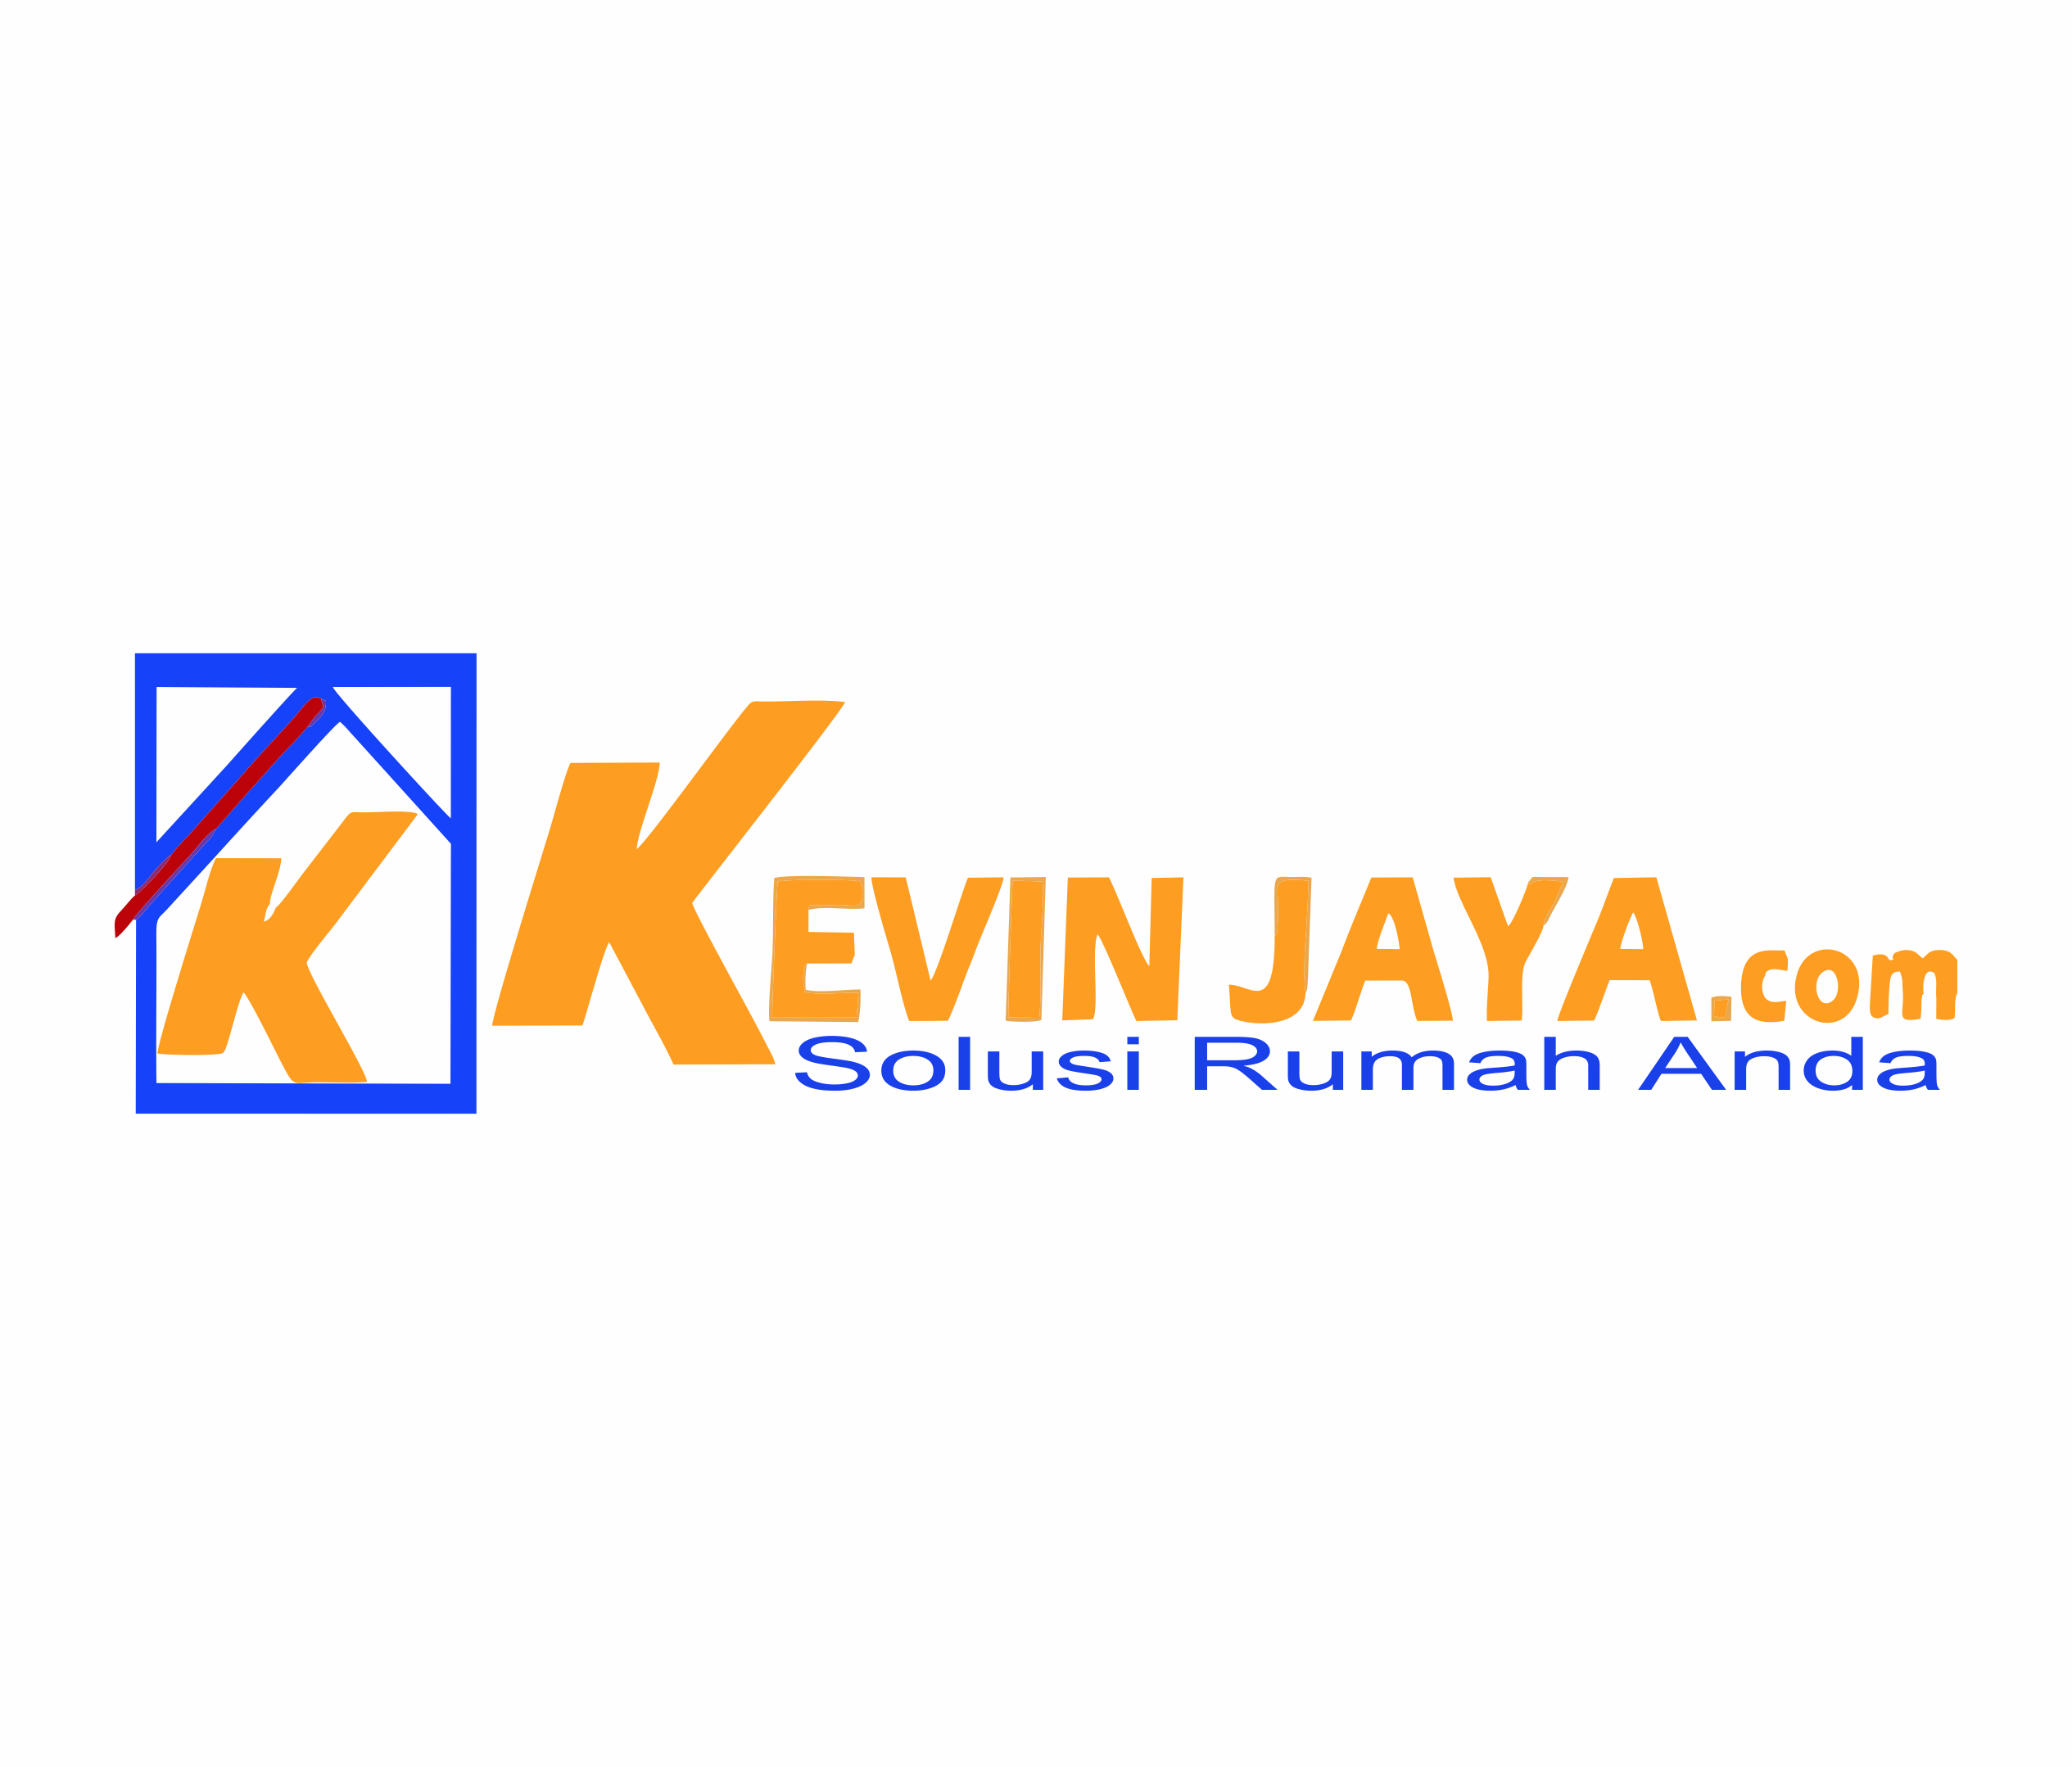 Kevin Jaya